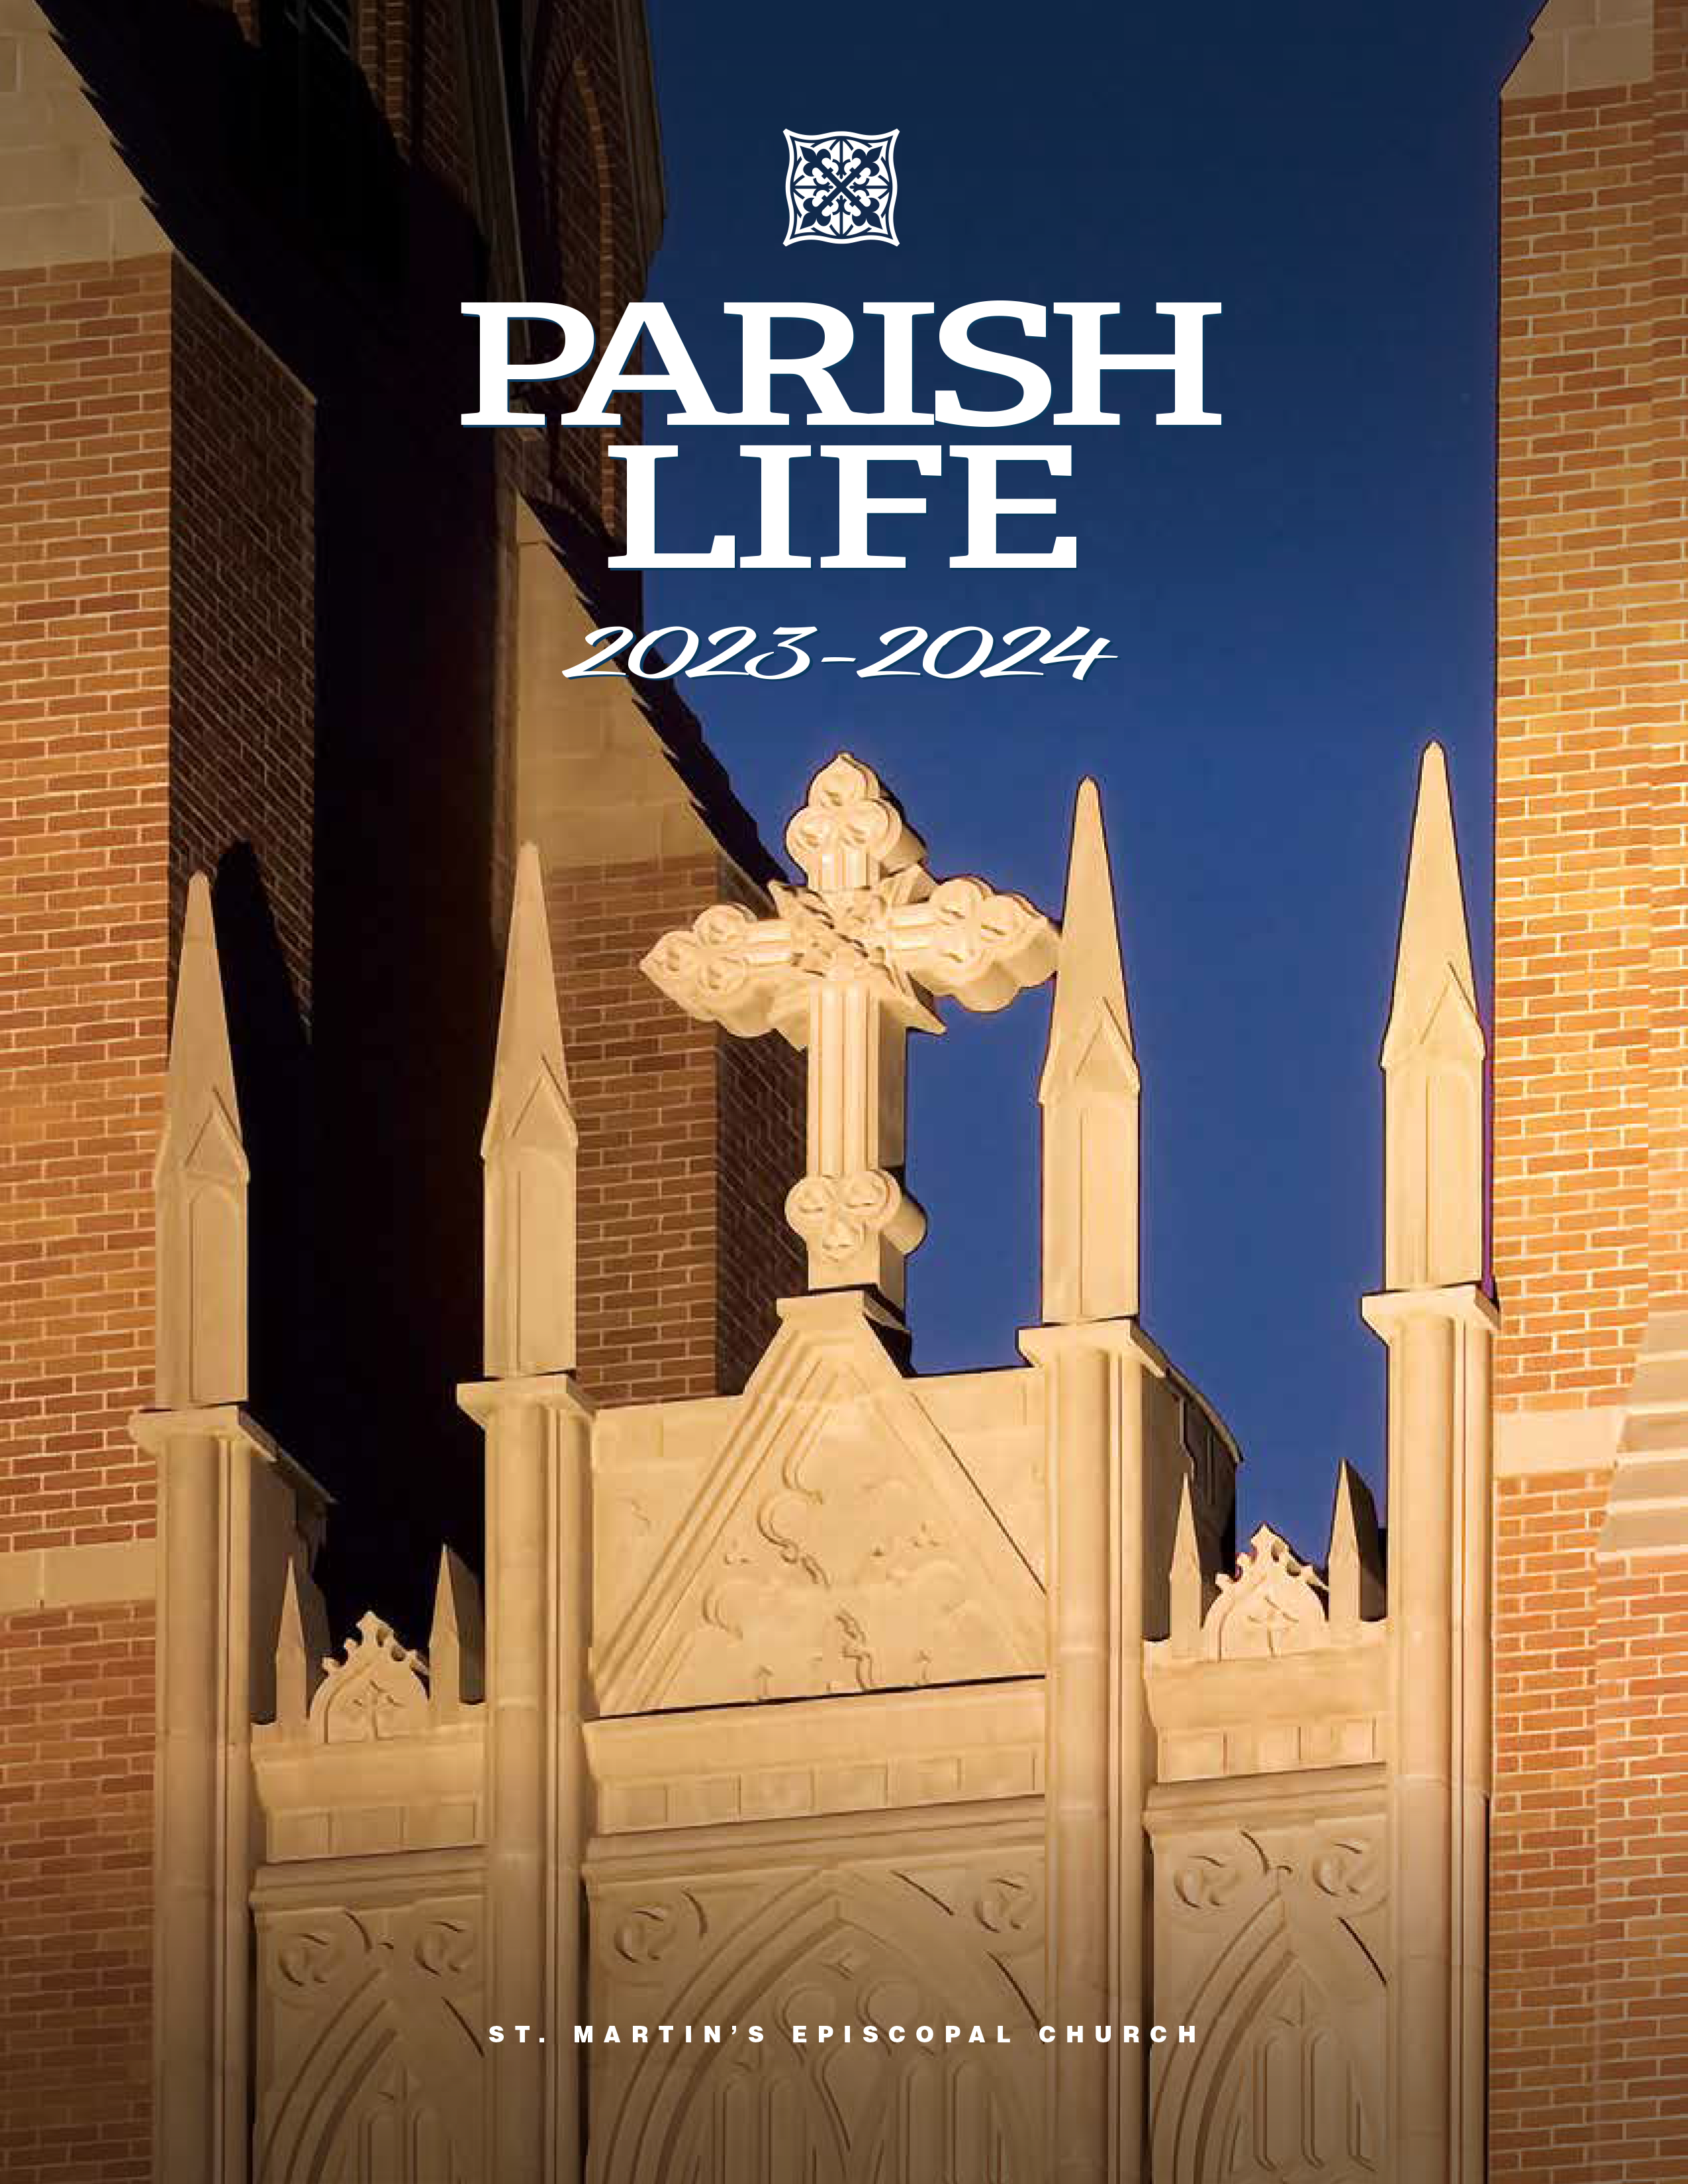 Featured image for “2023-2024 Parish Life”